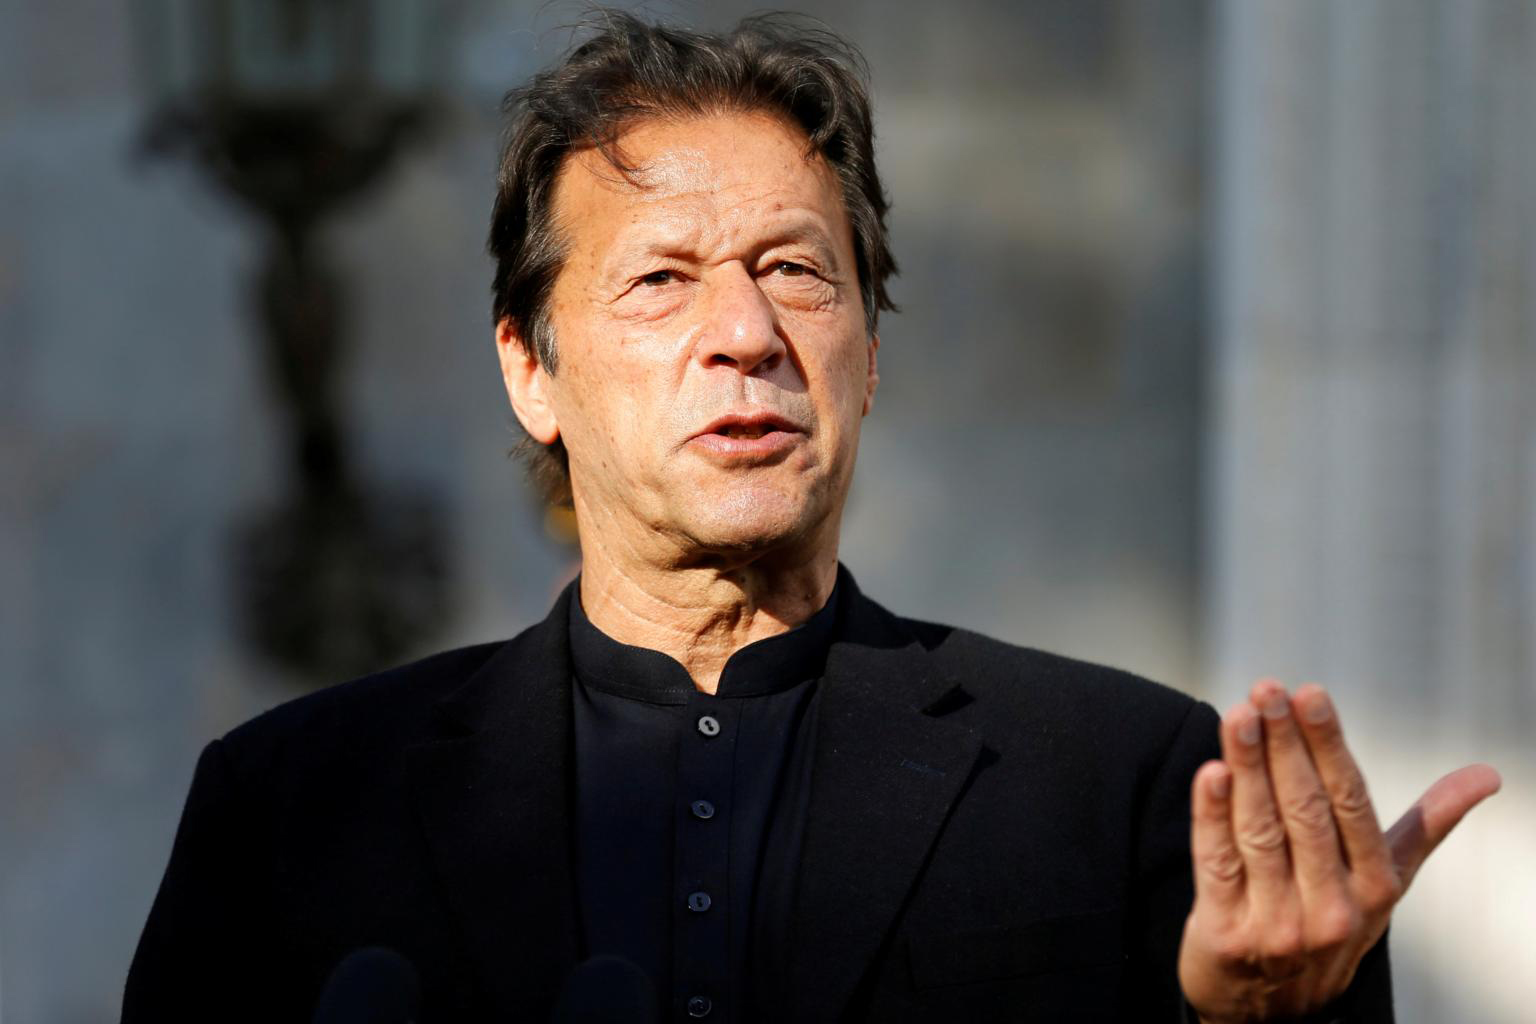 Pakistan PM Khan tests COVID-19 positive: health minister